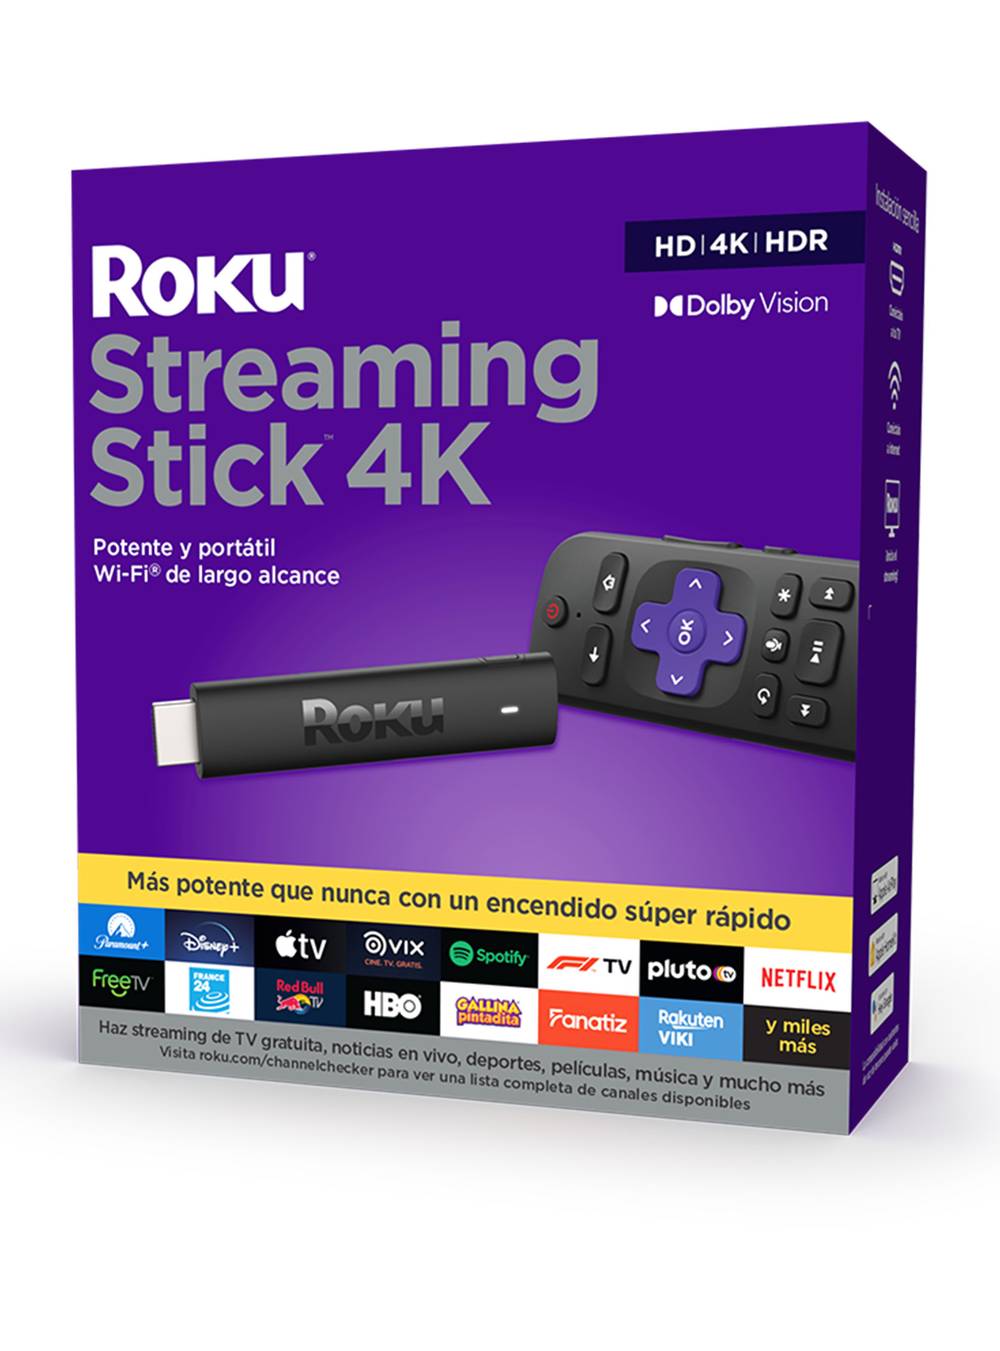 Roku streaming stick 4k (1 u)